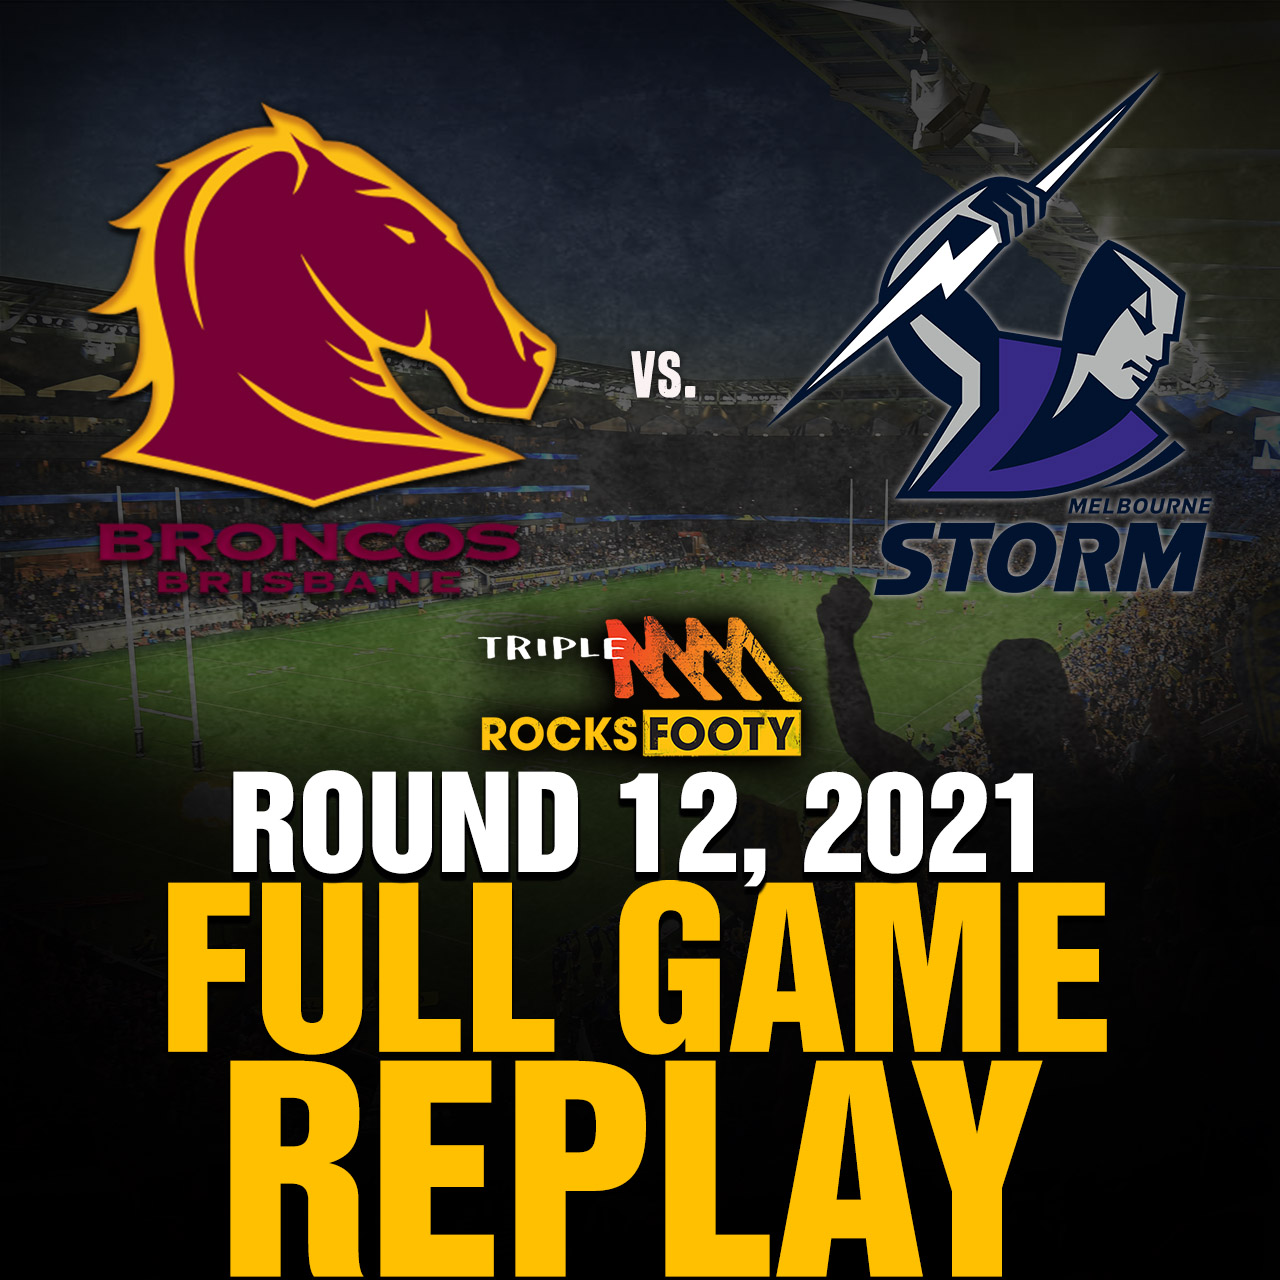 FULL GAME REPLAY | Brisbane Broncos vs. Melbourne Storm